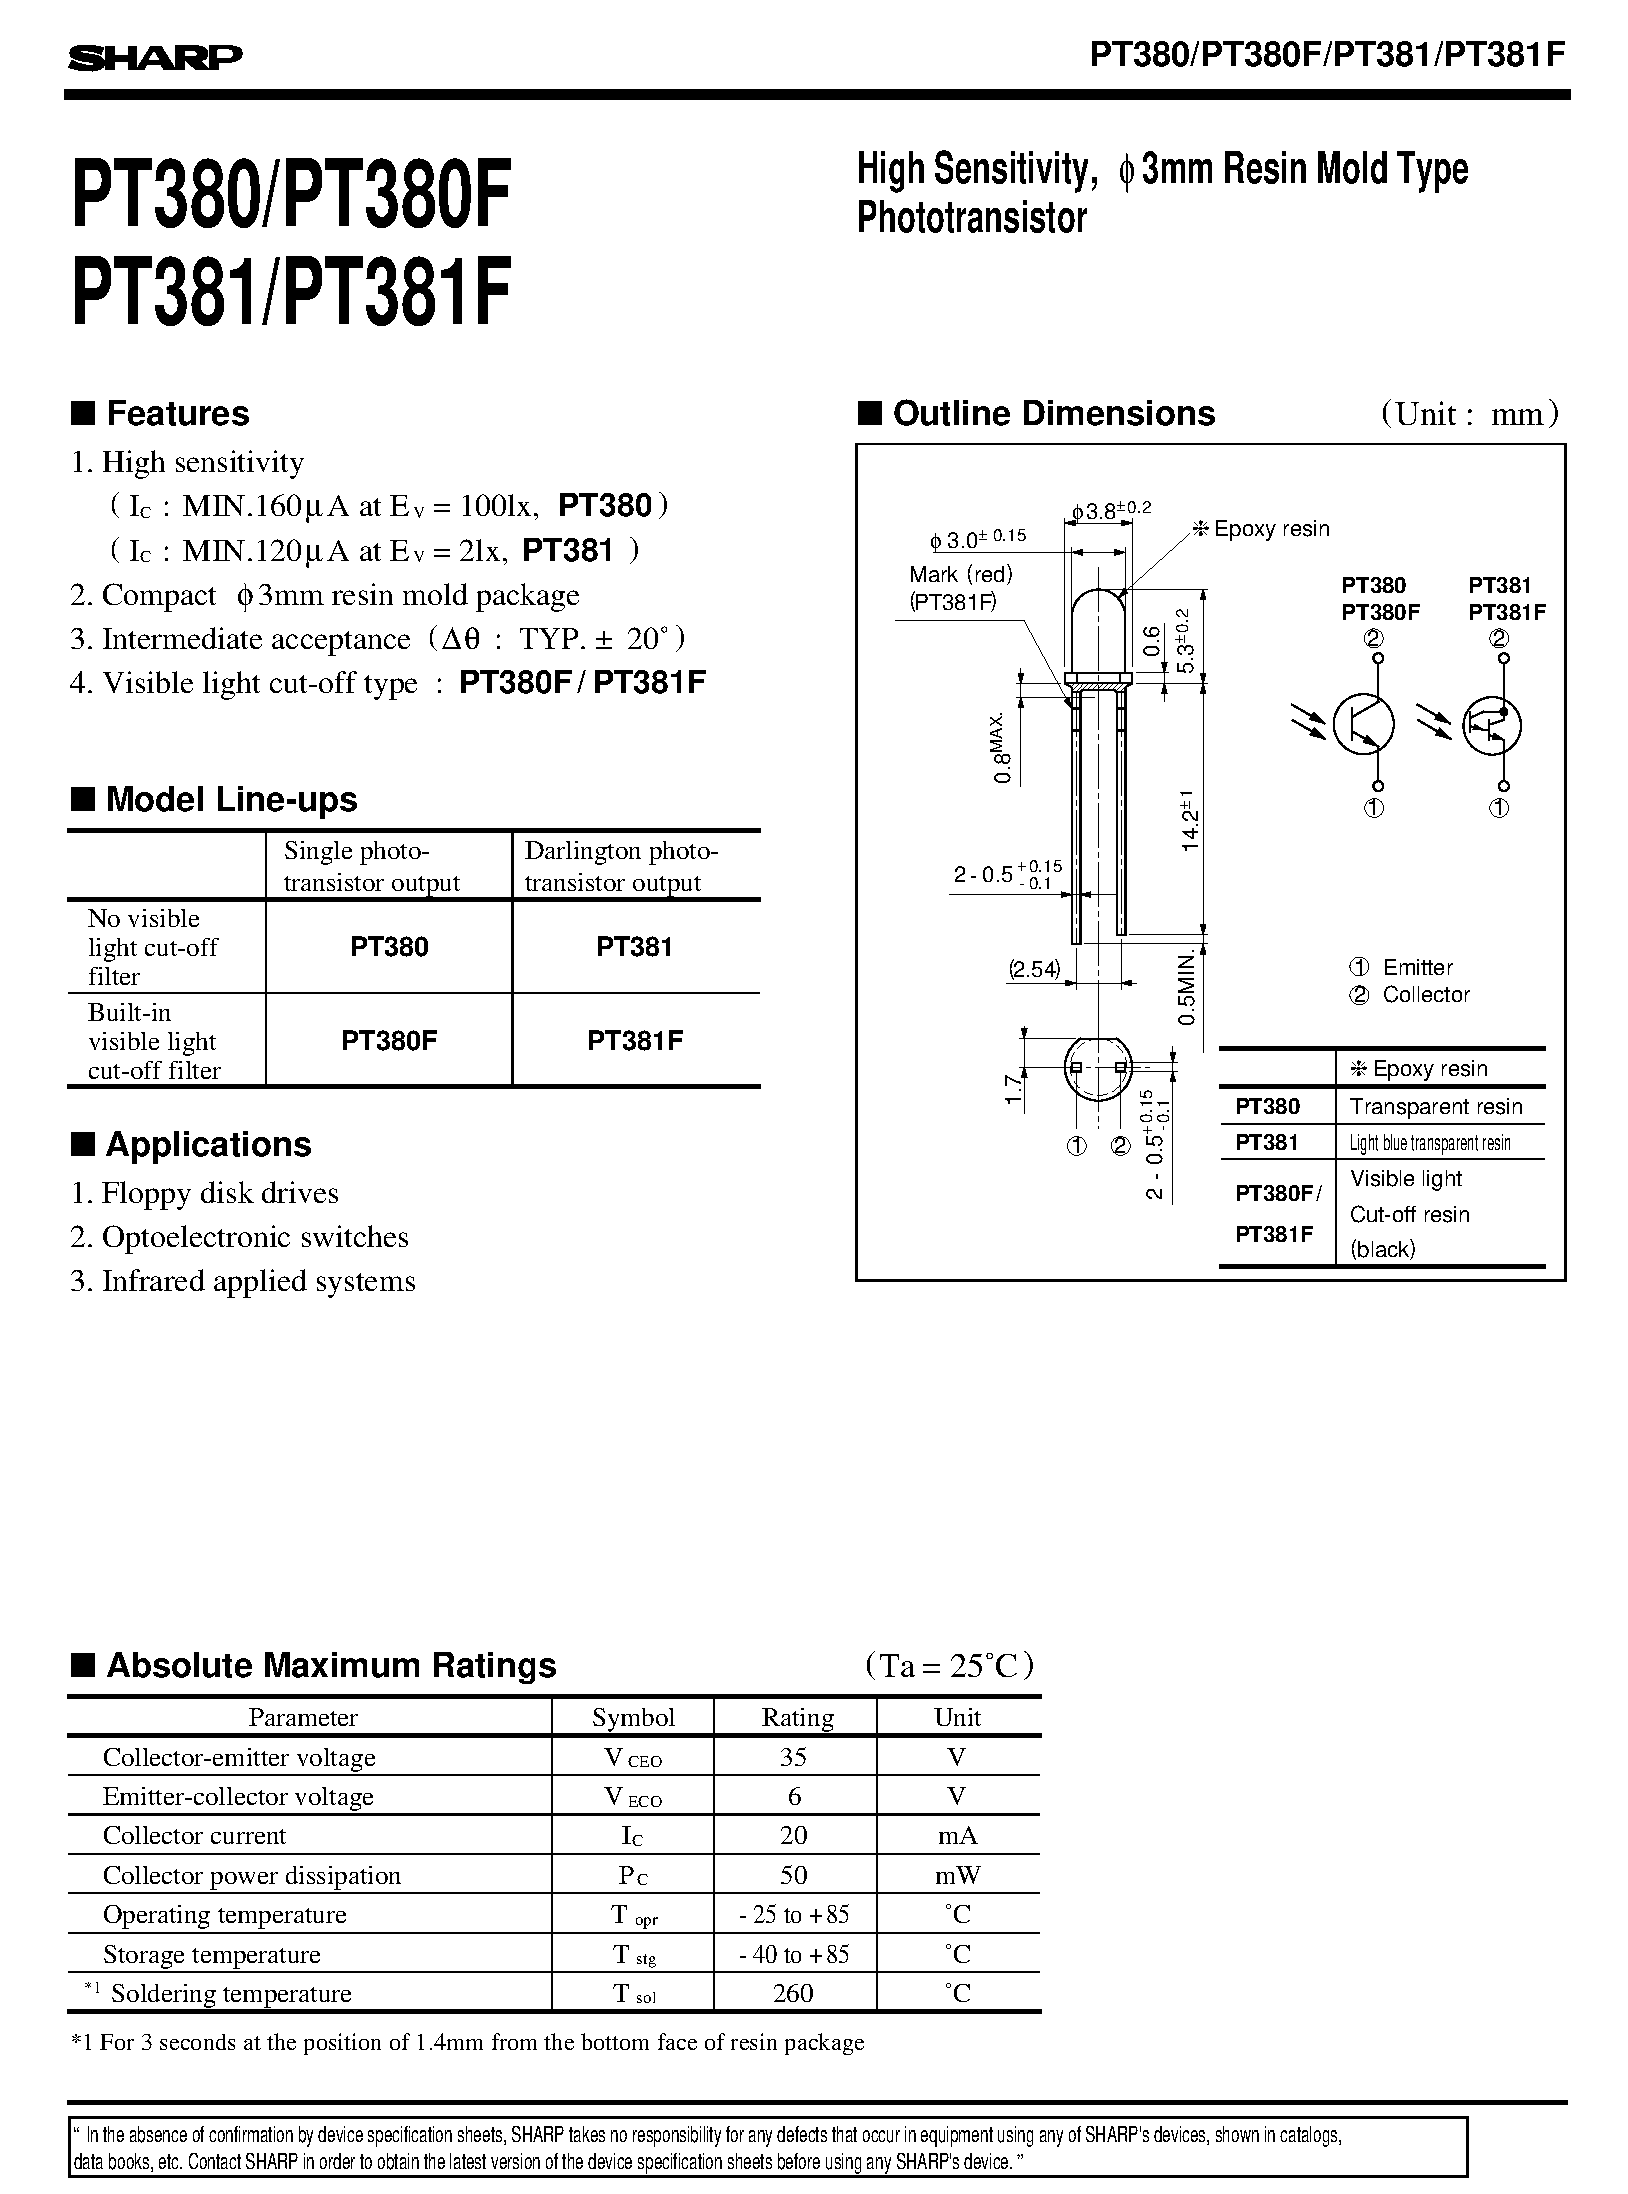 Datasheet PT380 - High Sensitivity/ f 3mm Resin Mold Type Phototransistor page 1